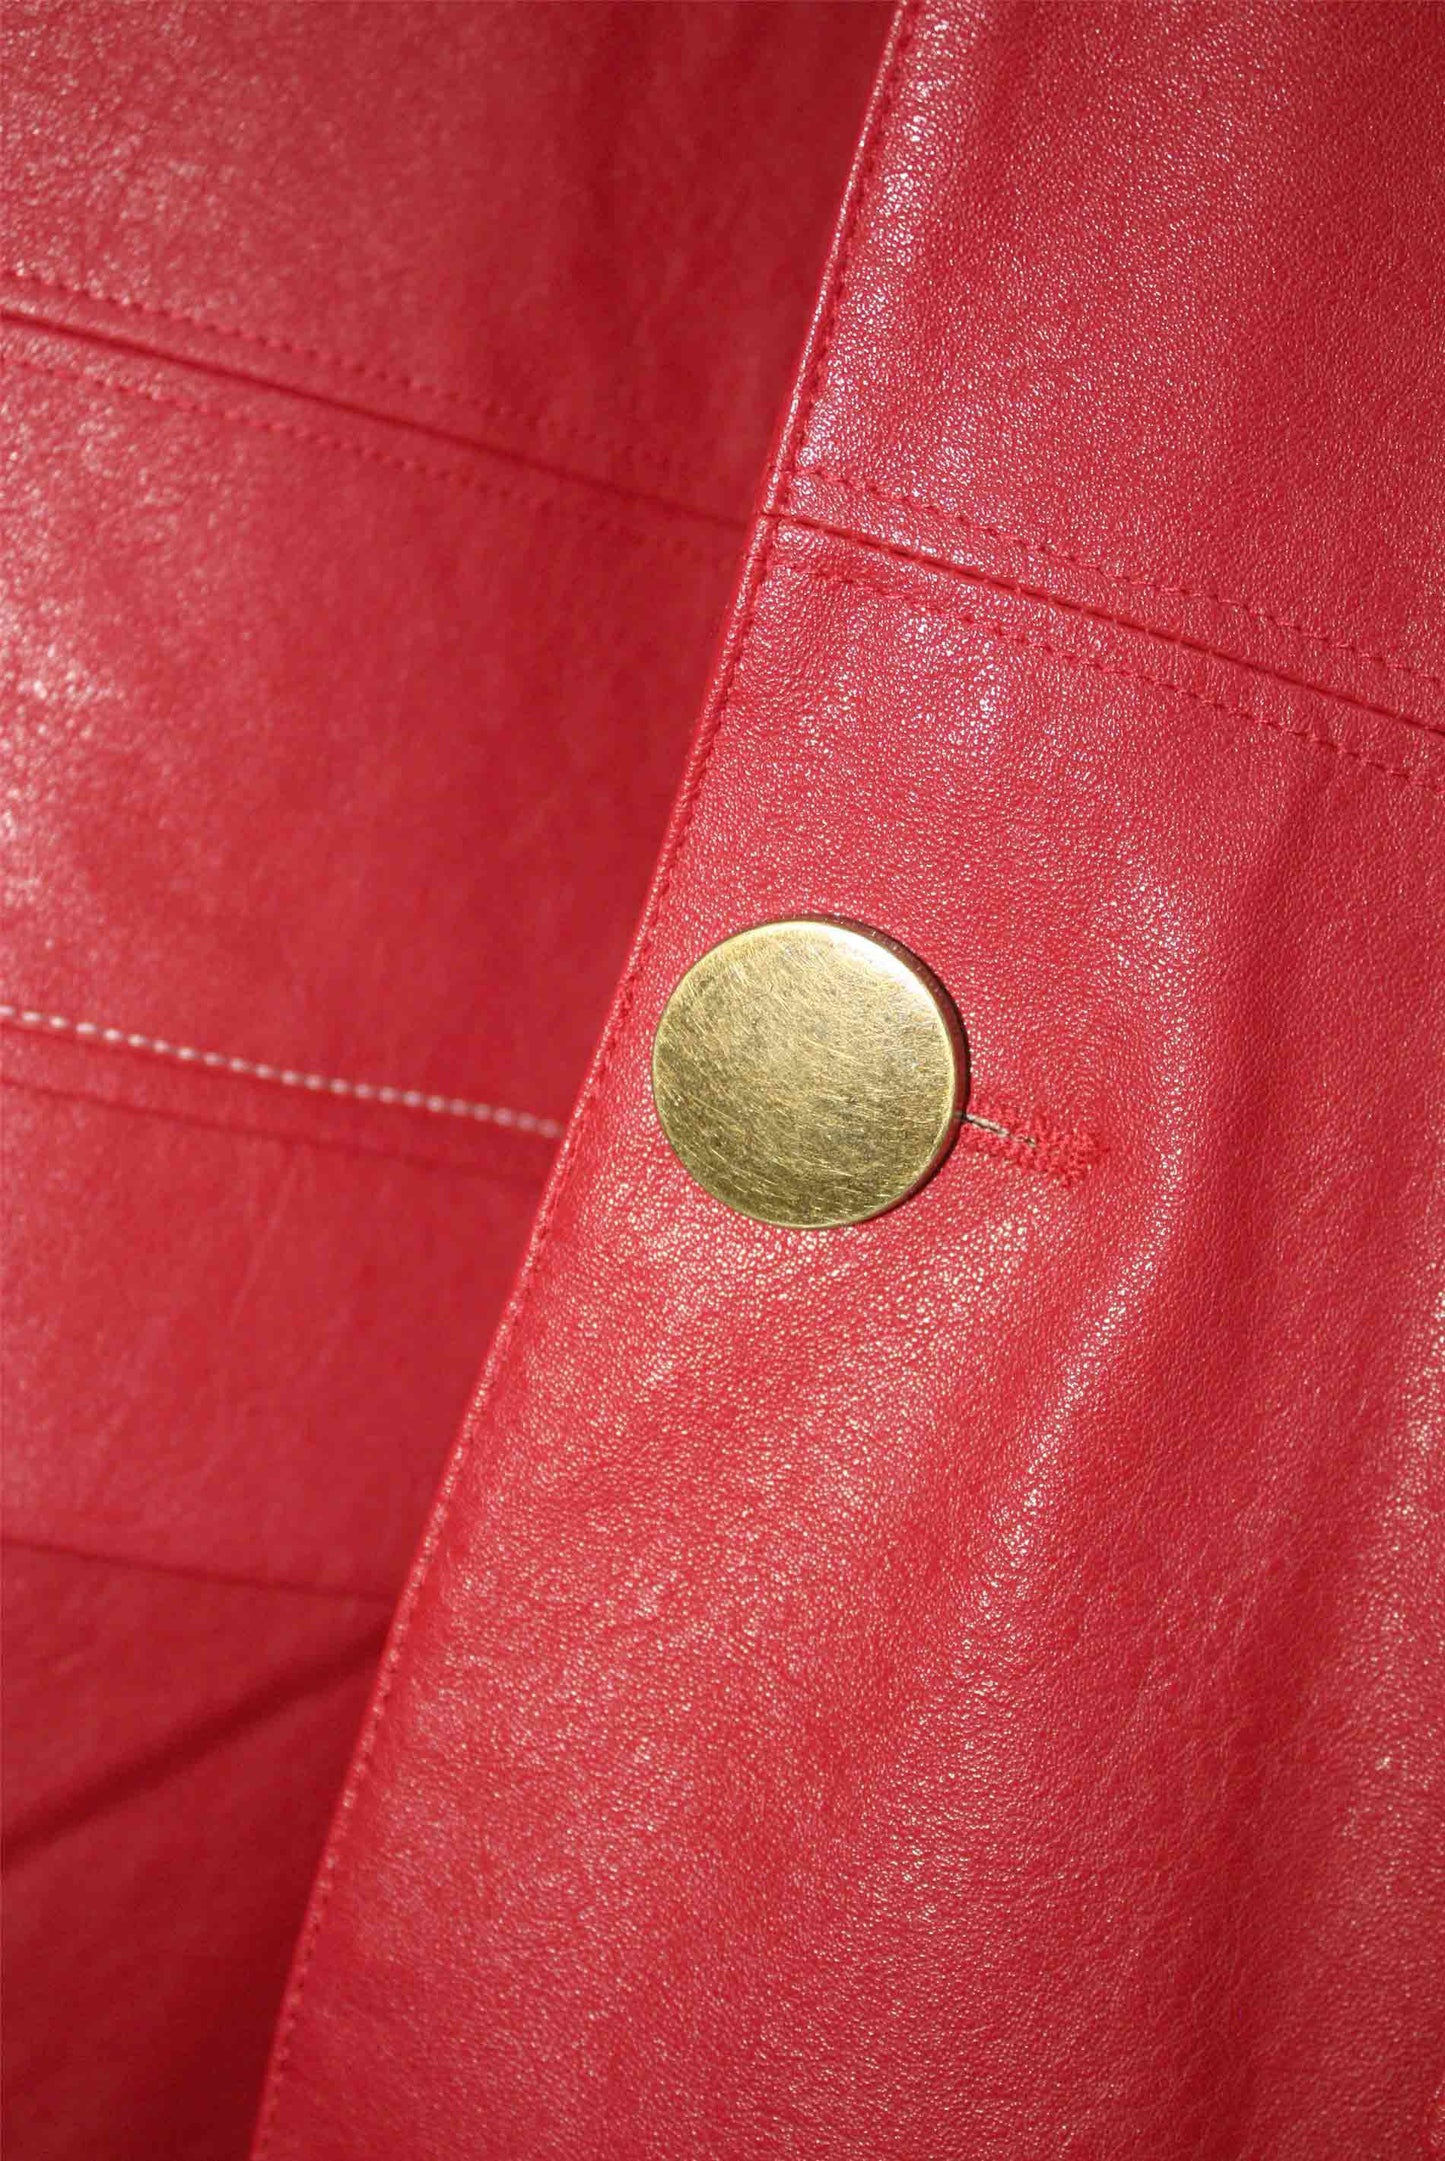 Mule Leather Coat Vintage Red